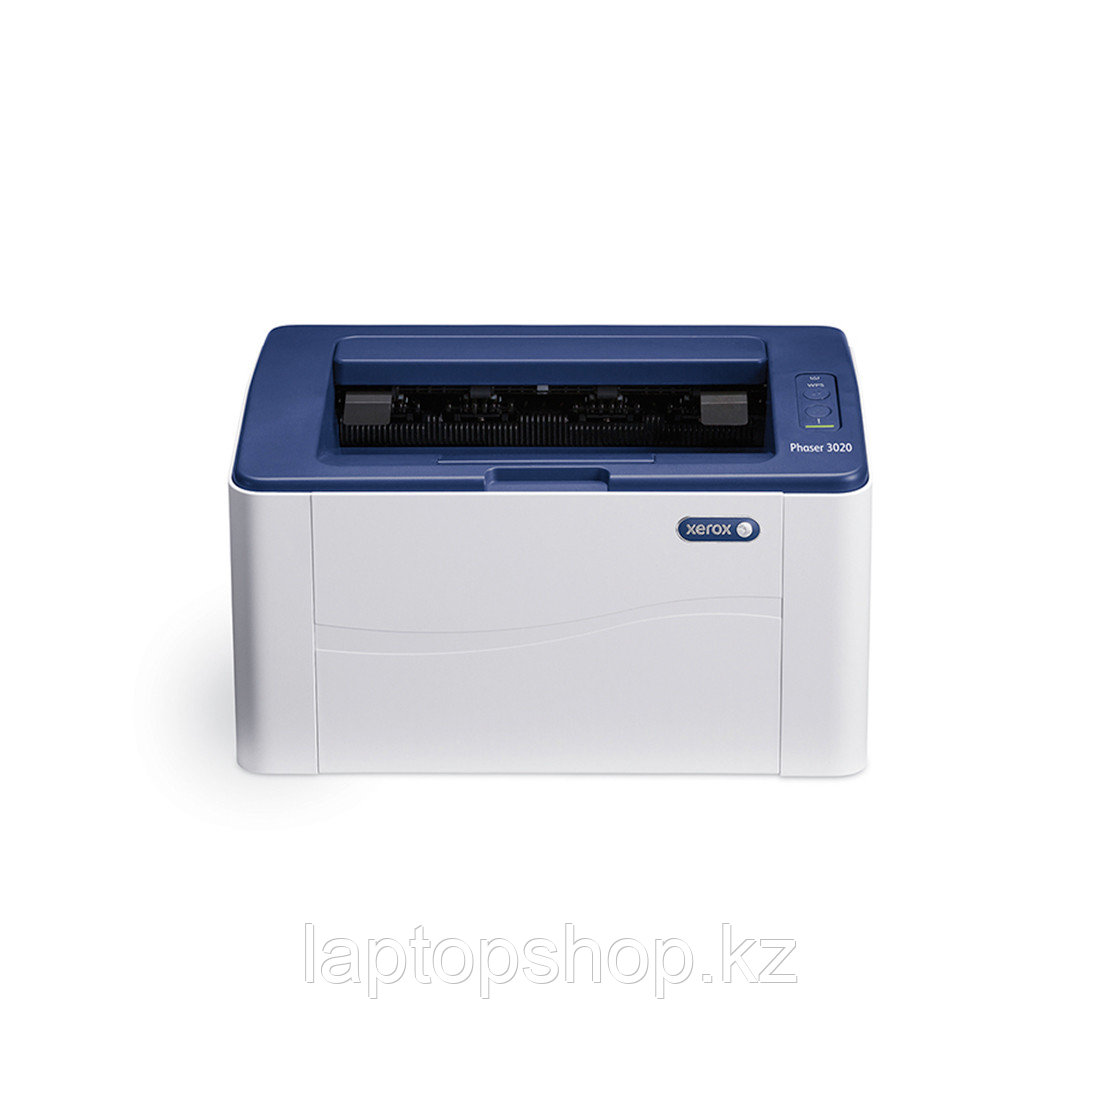 Монохромный принтер Xerox Phaser 3020BI, фото 1